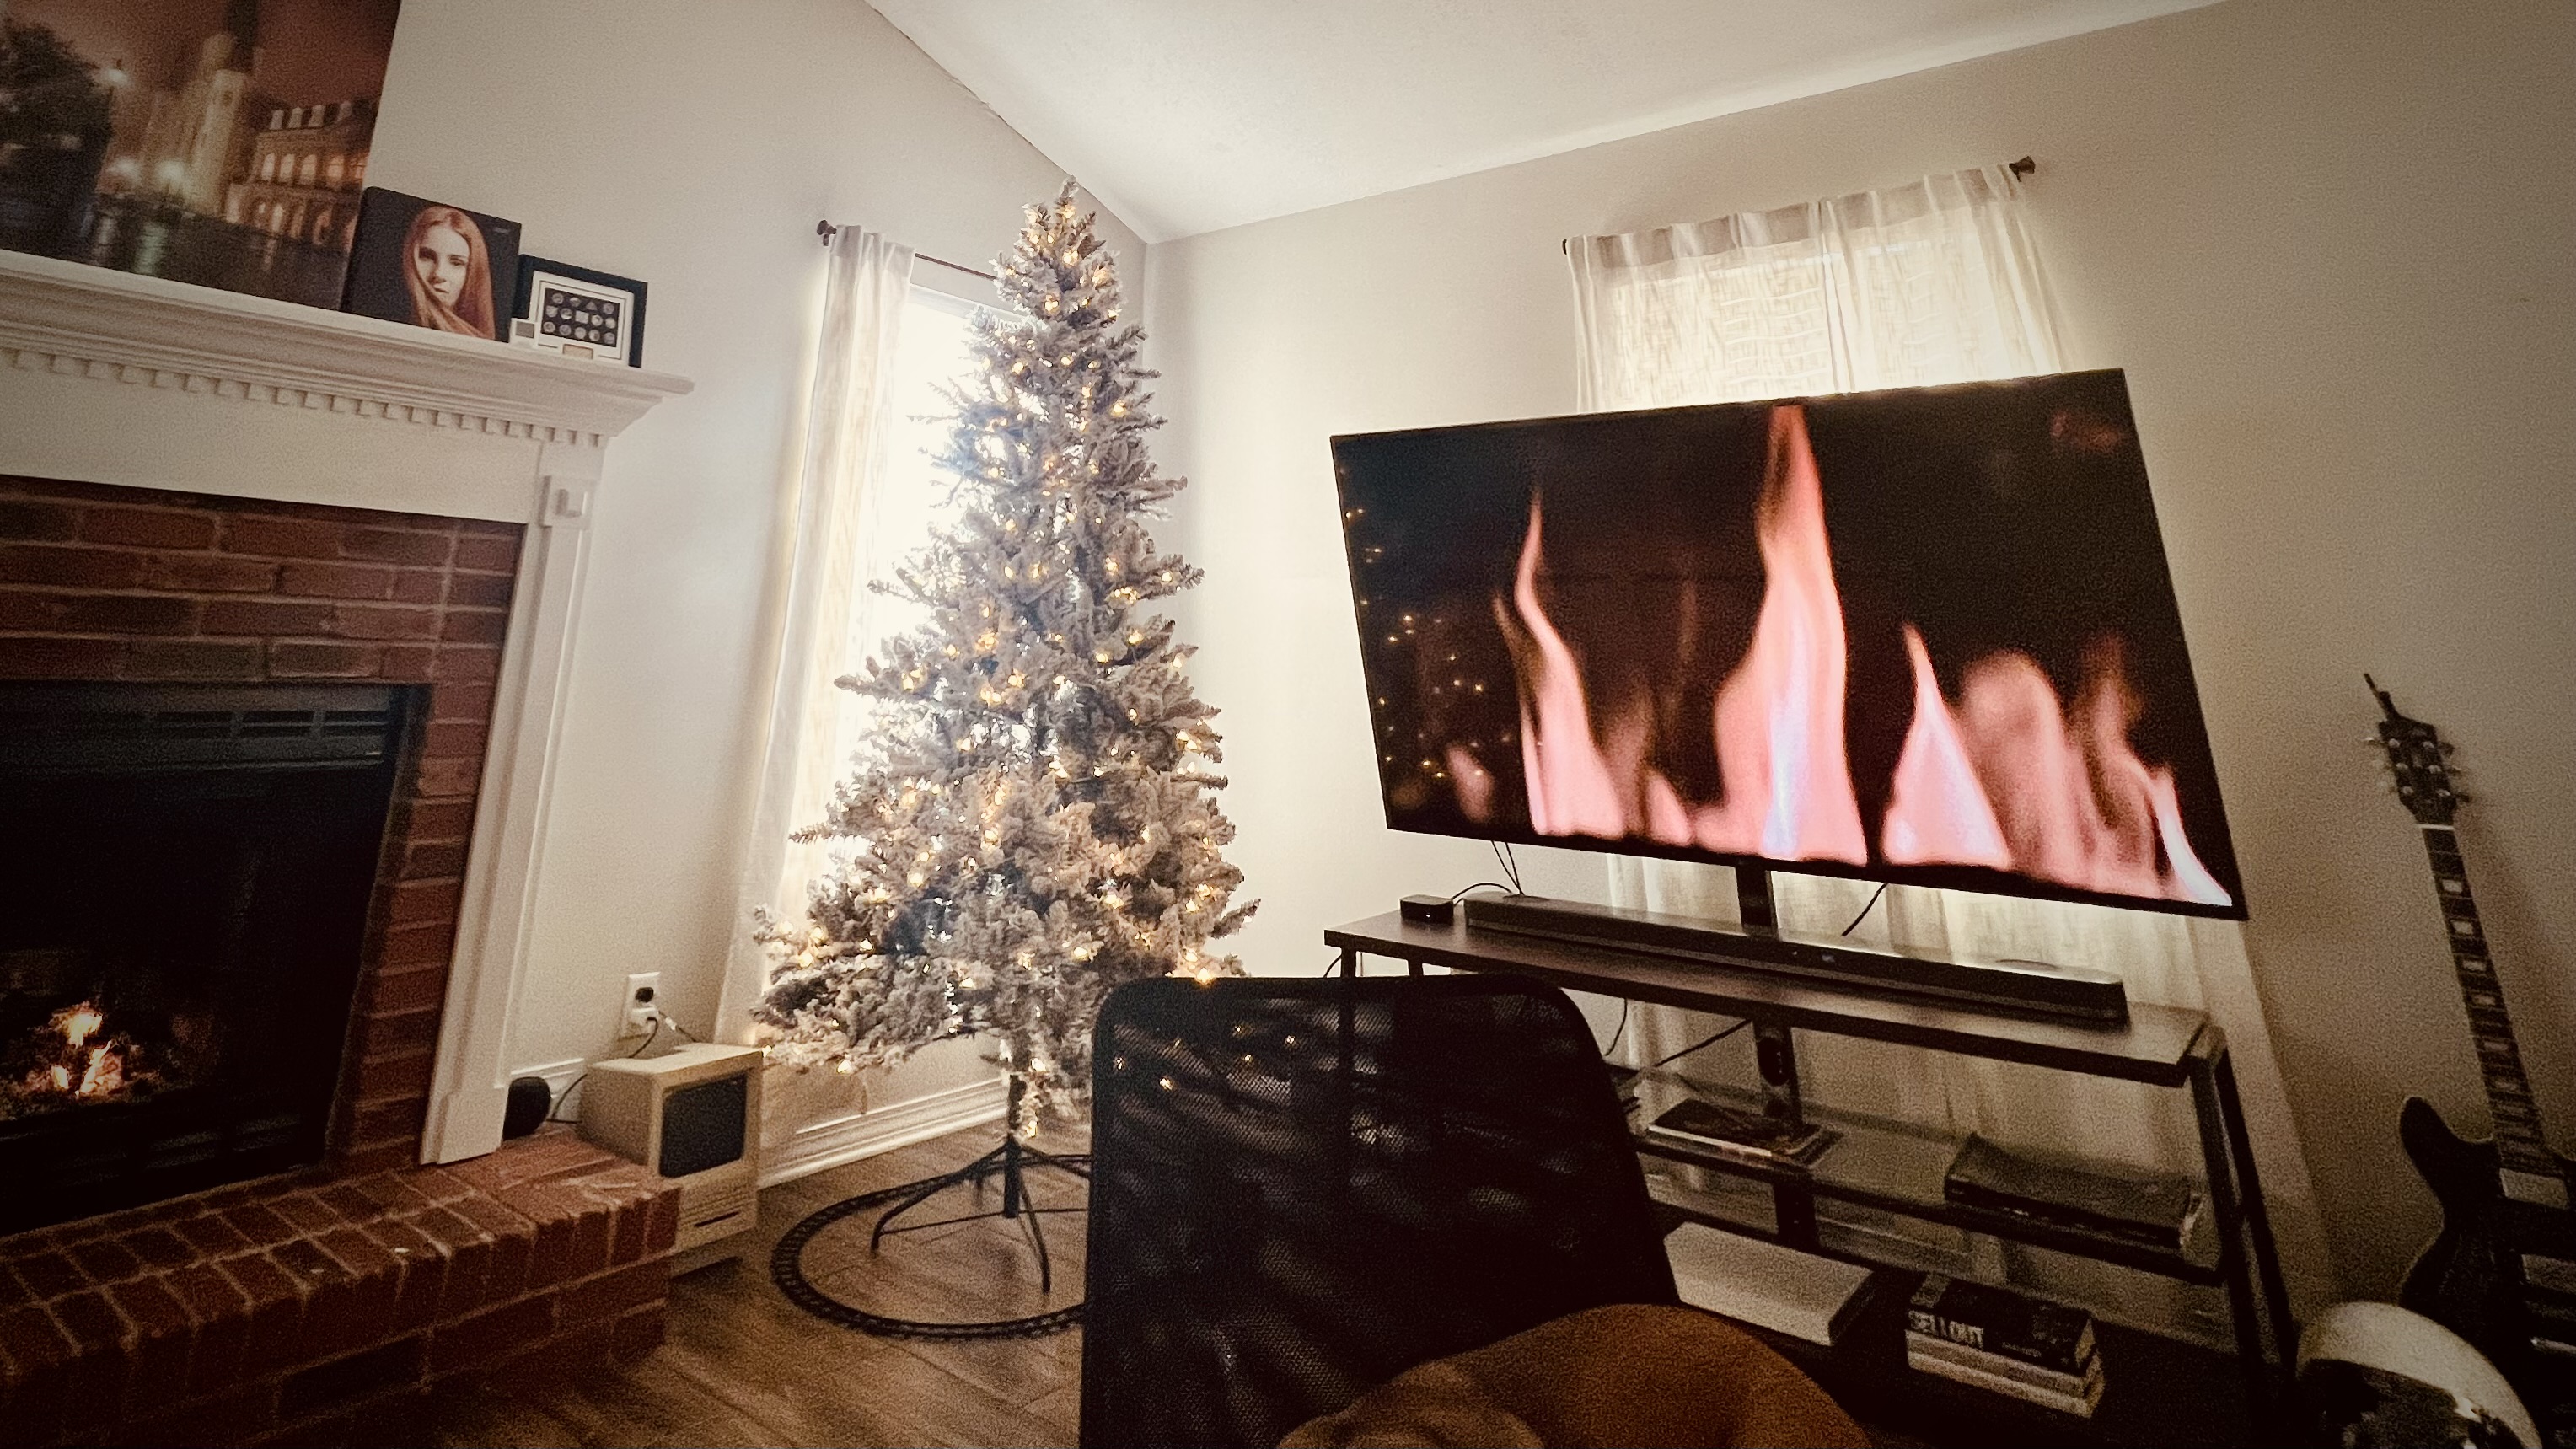 live fireplace screensaver